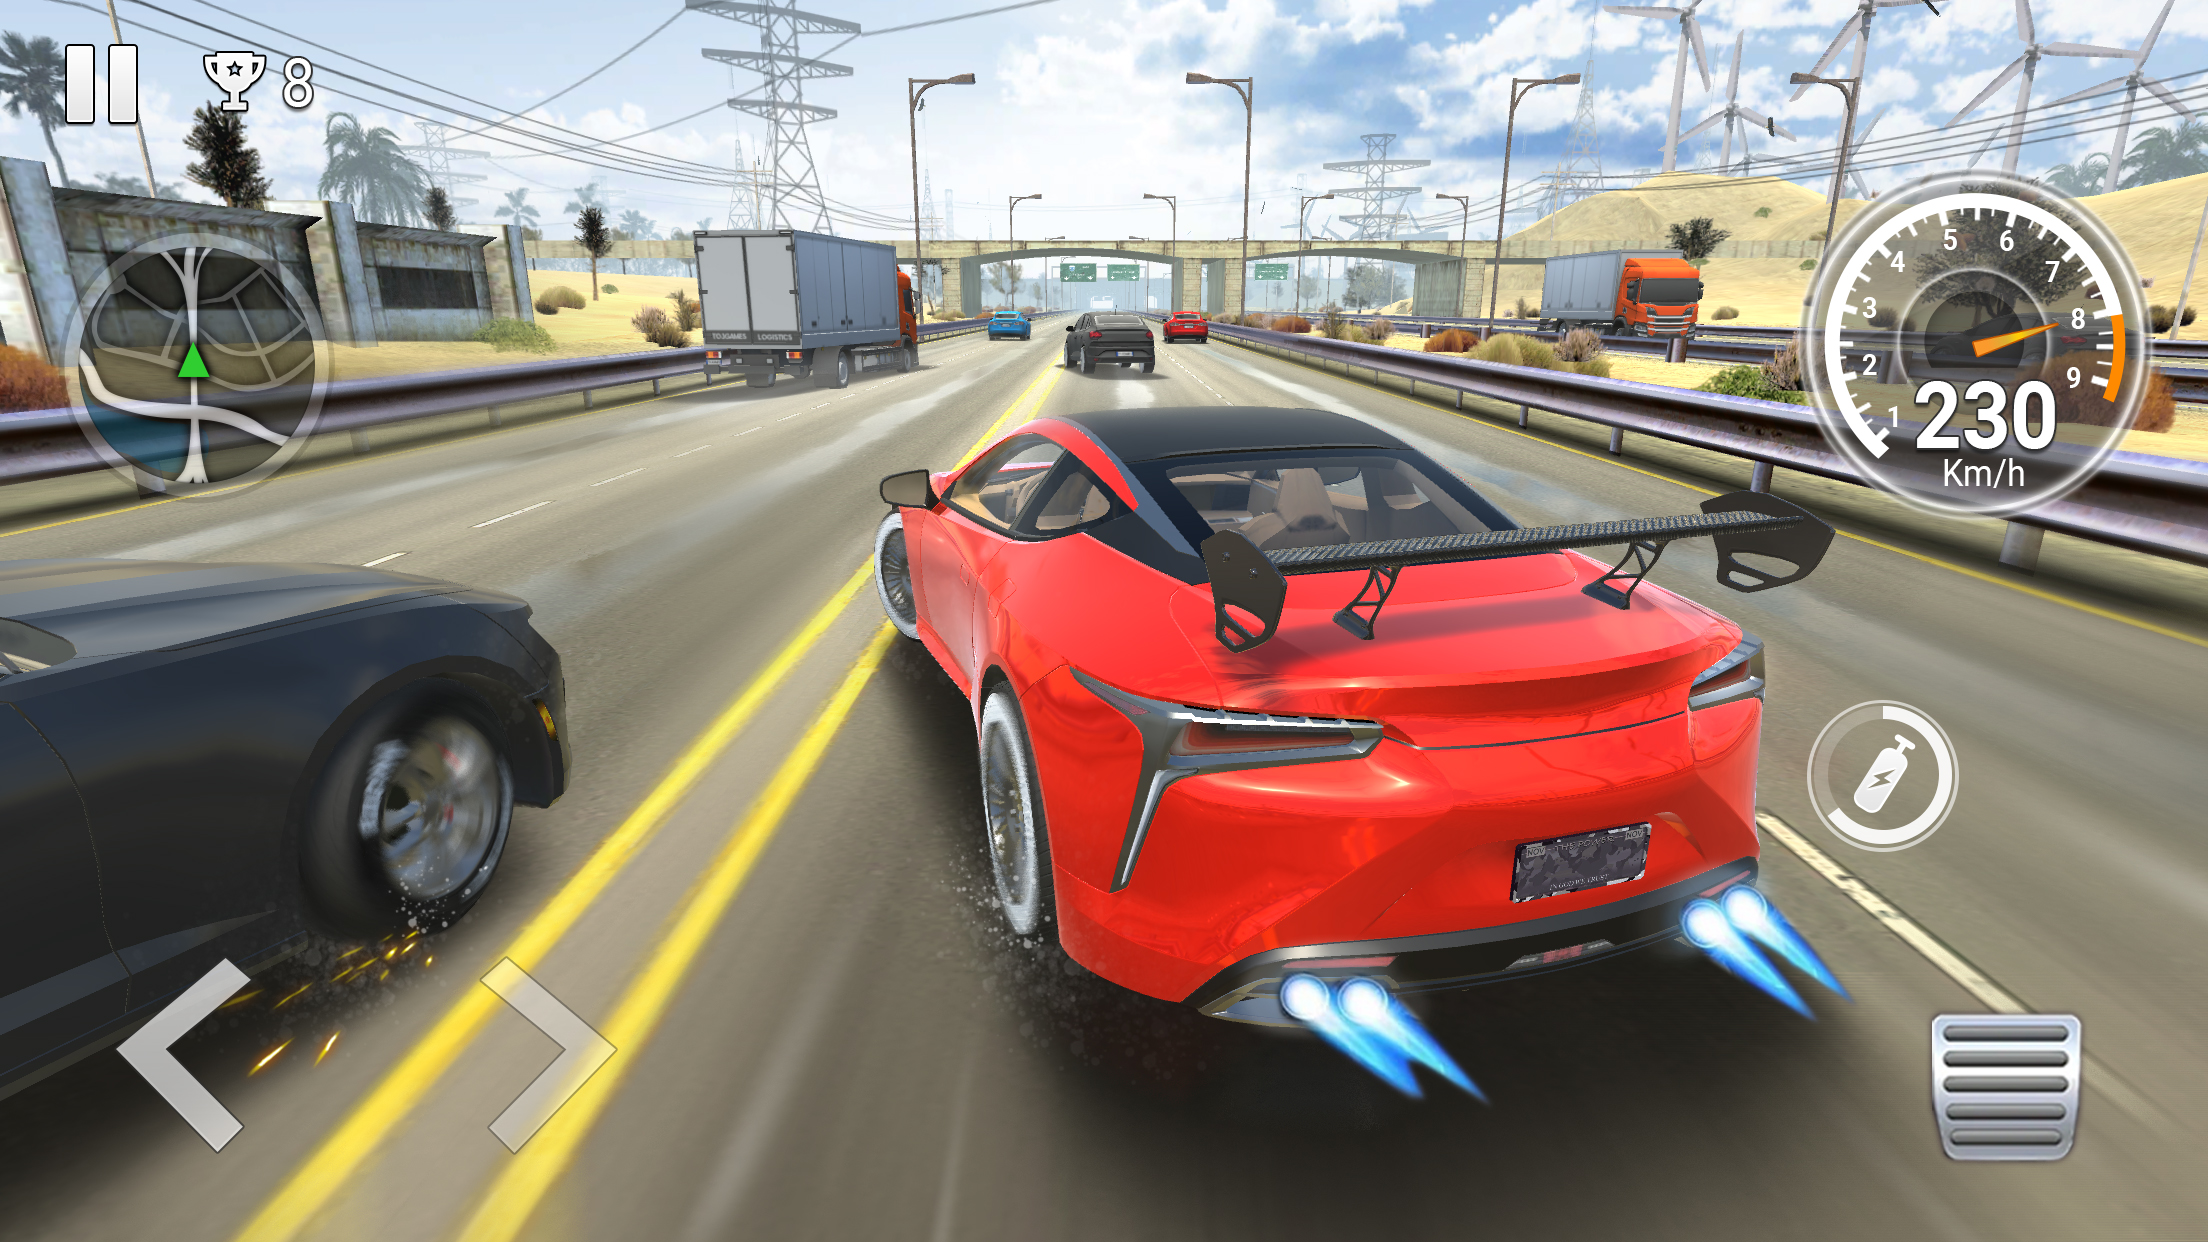 Play Traffic Driving Car Simulator Online